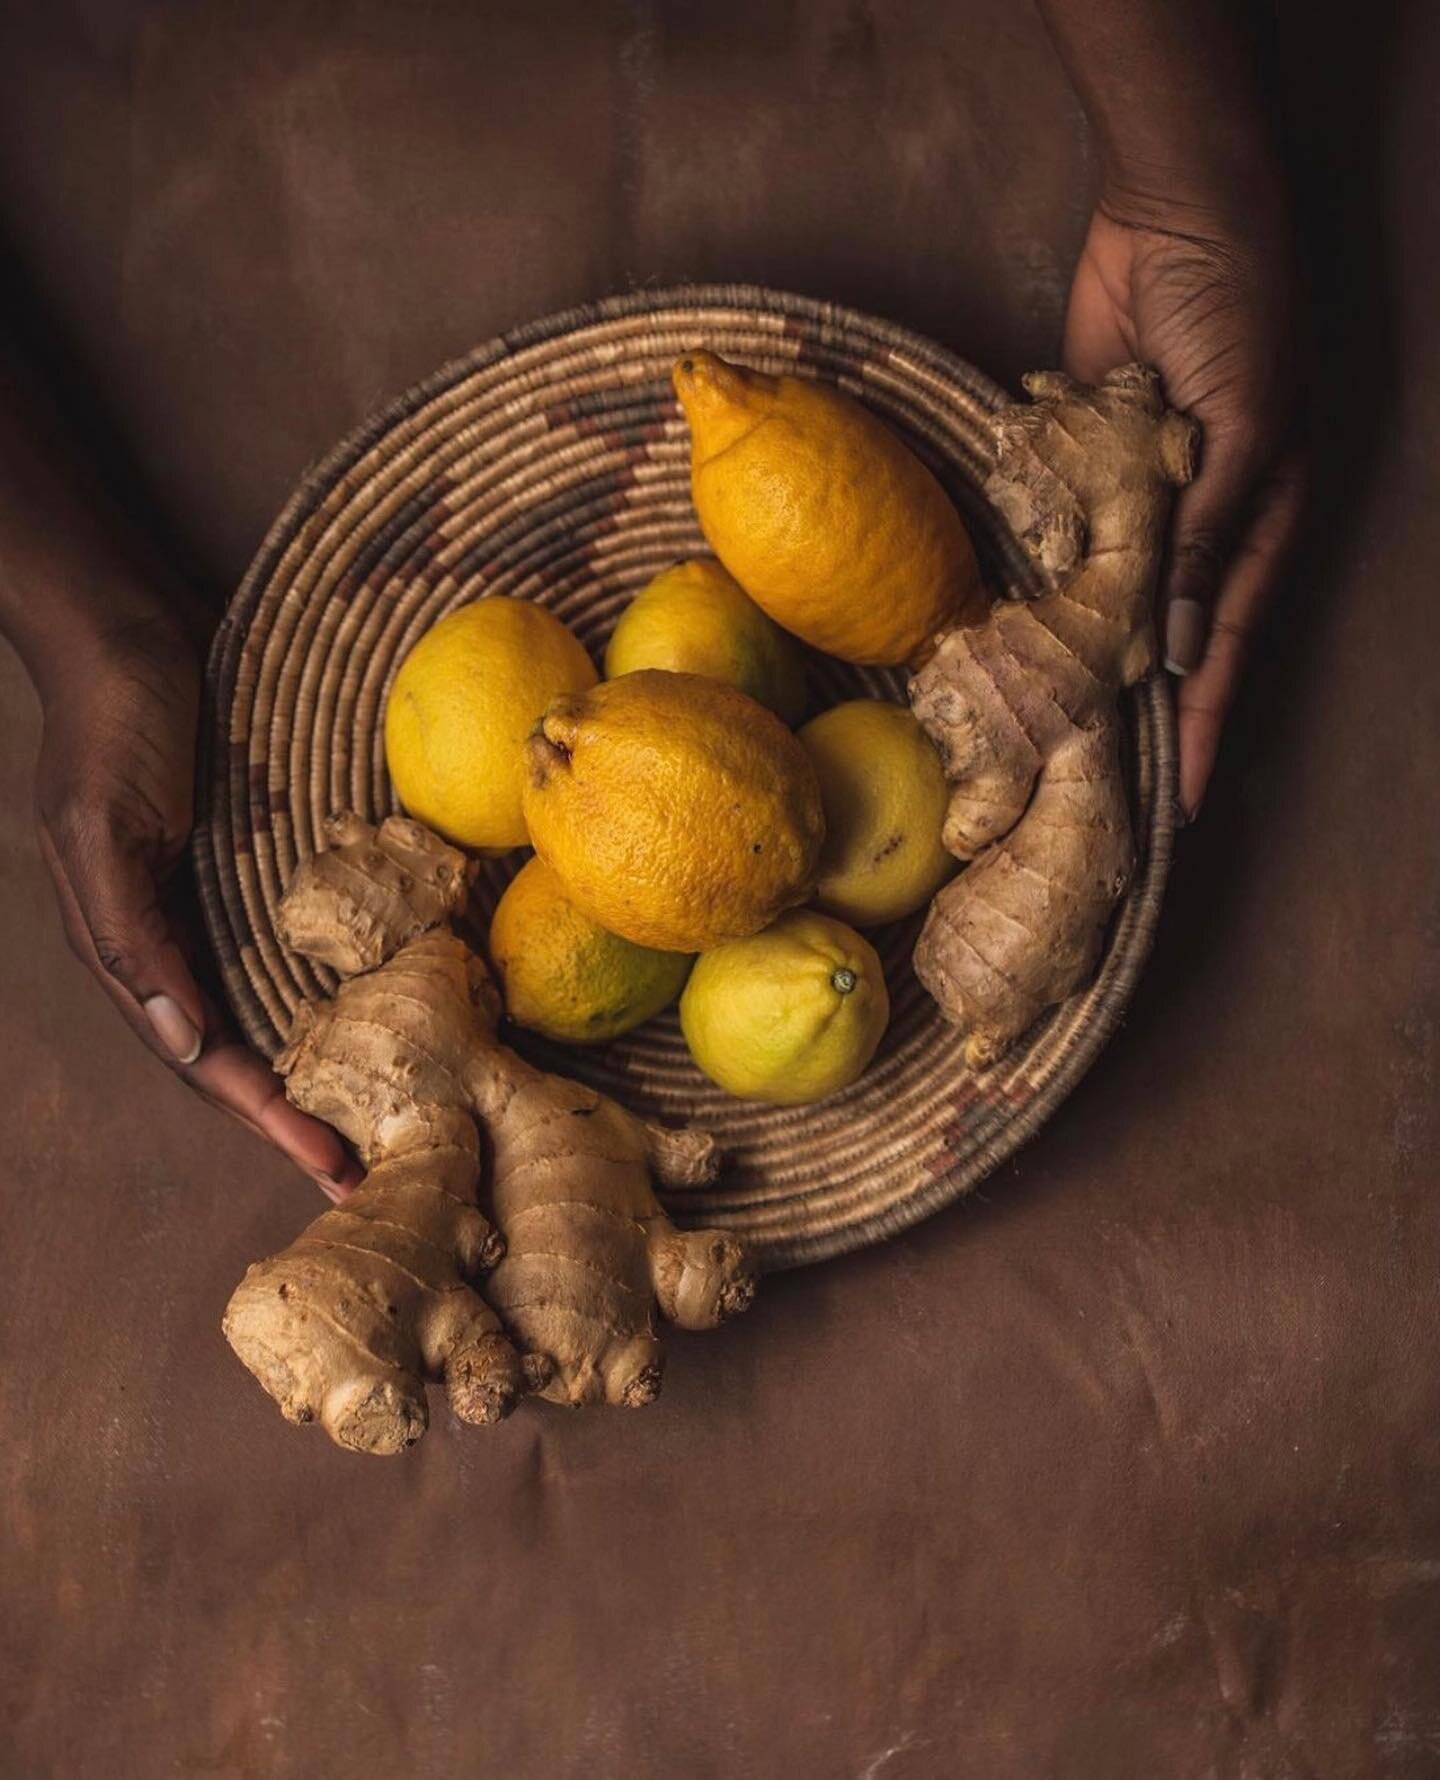 Sharing some Mid-week vitamins 🍋 🍋 
.
.
.
.
.
.
.
.
.
.
.
#blackwomenfoodphotog #africanfoodbloggers #thatsdarling #asweetpointofview #fridaychallenge #creativefoodphotography #simpleandstill#foodartblog#beautifullight #foodcreatives#beautifulcuisi